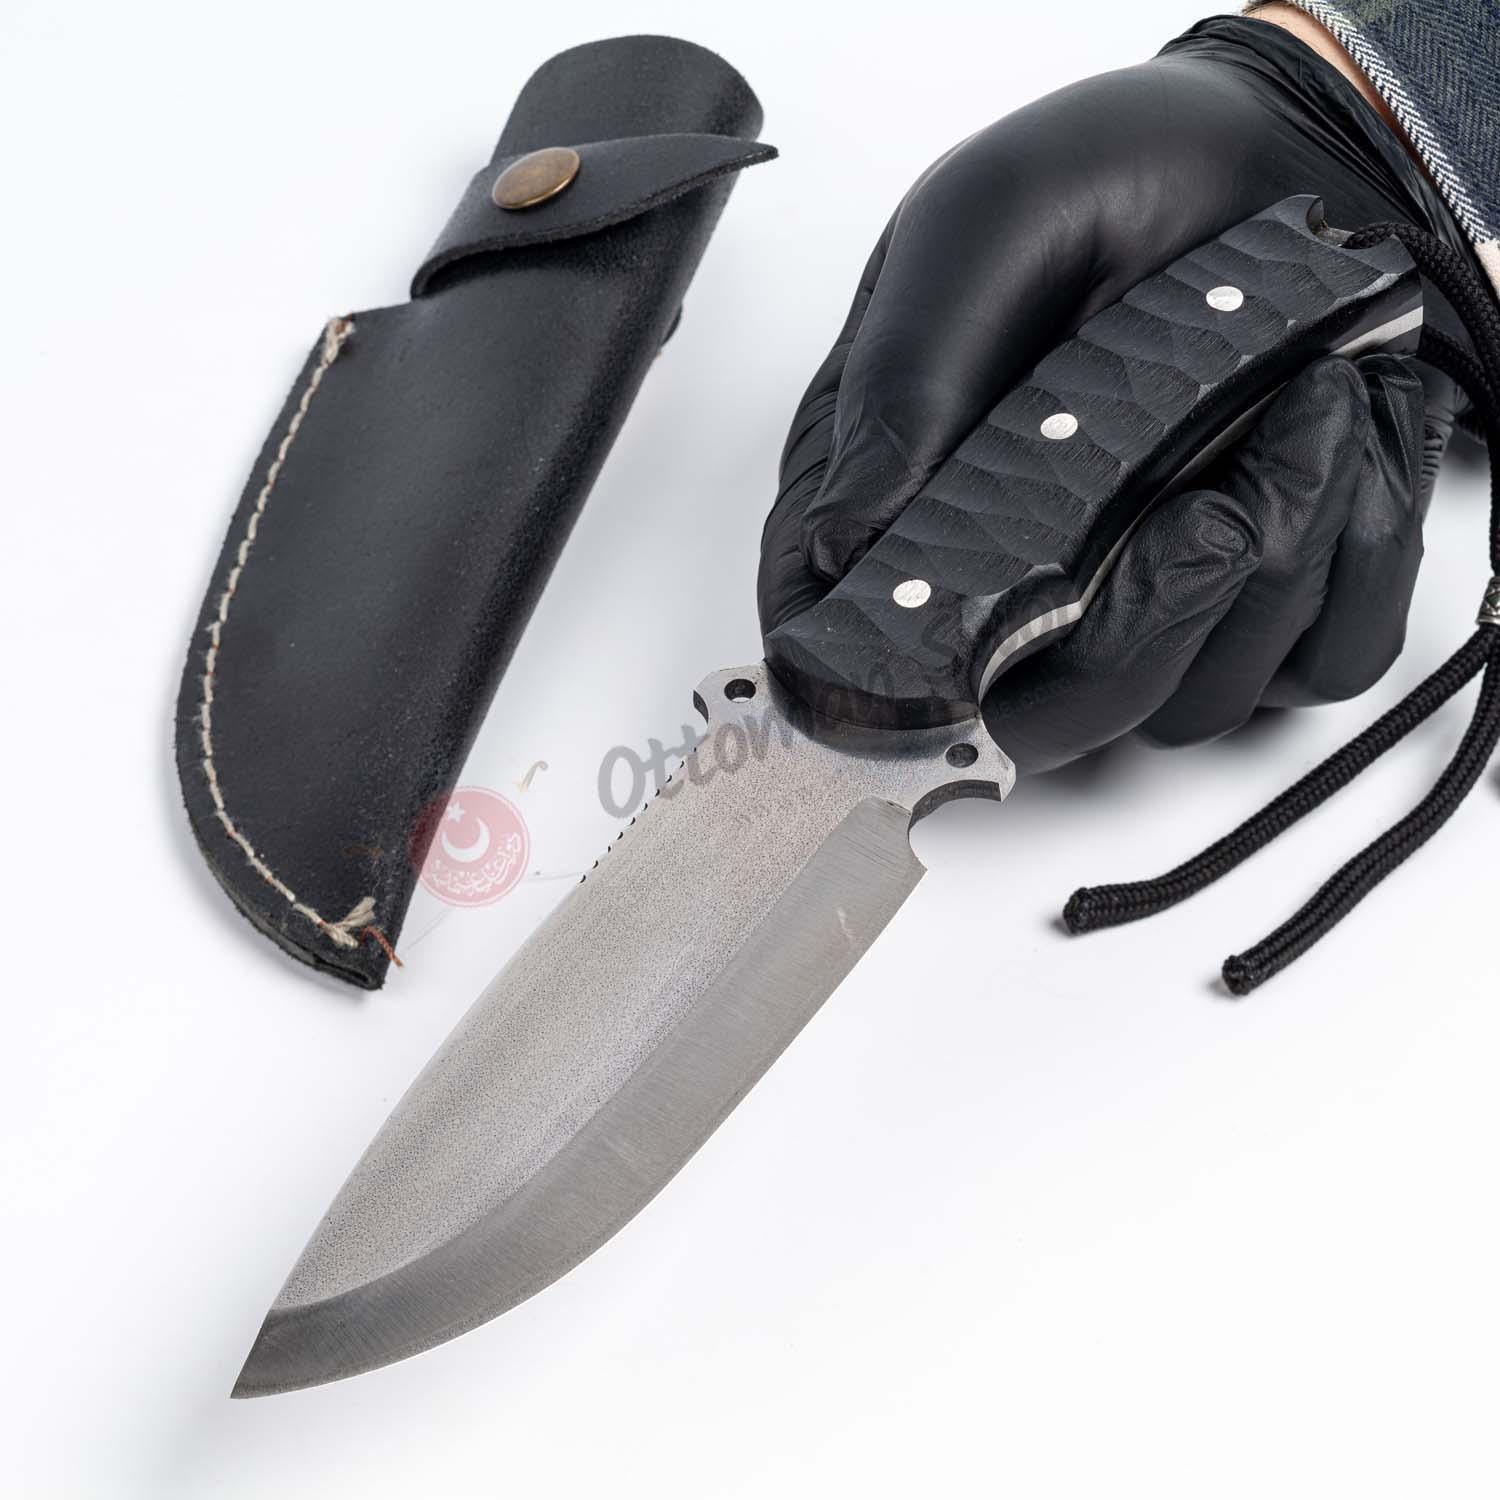 Compact Handle Custom Made Survival Knife (4)